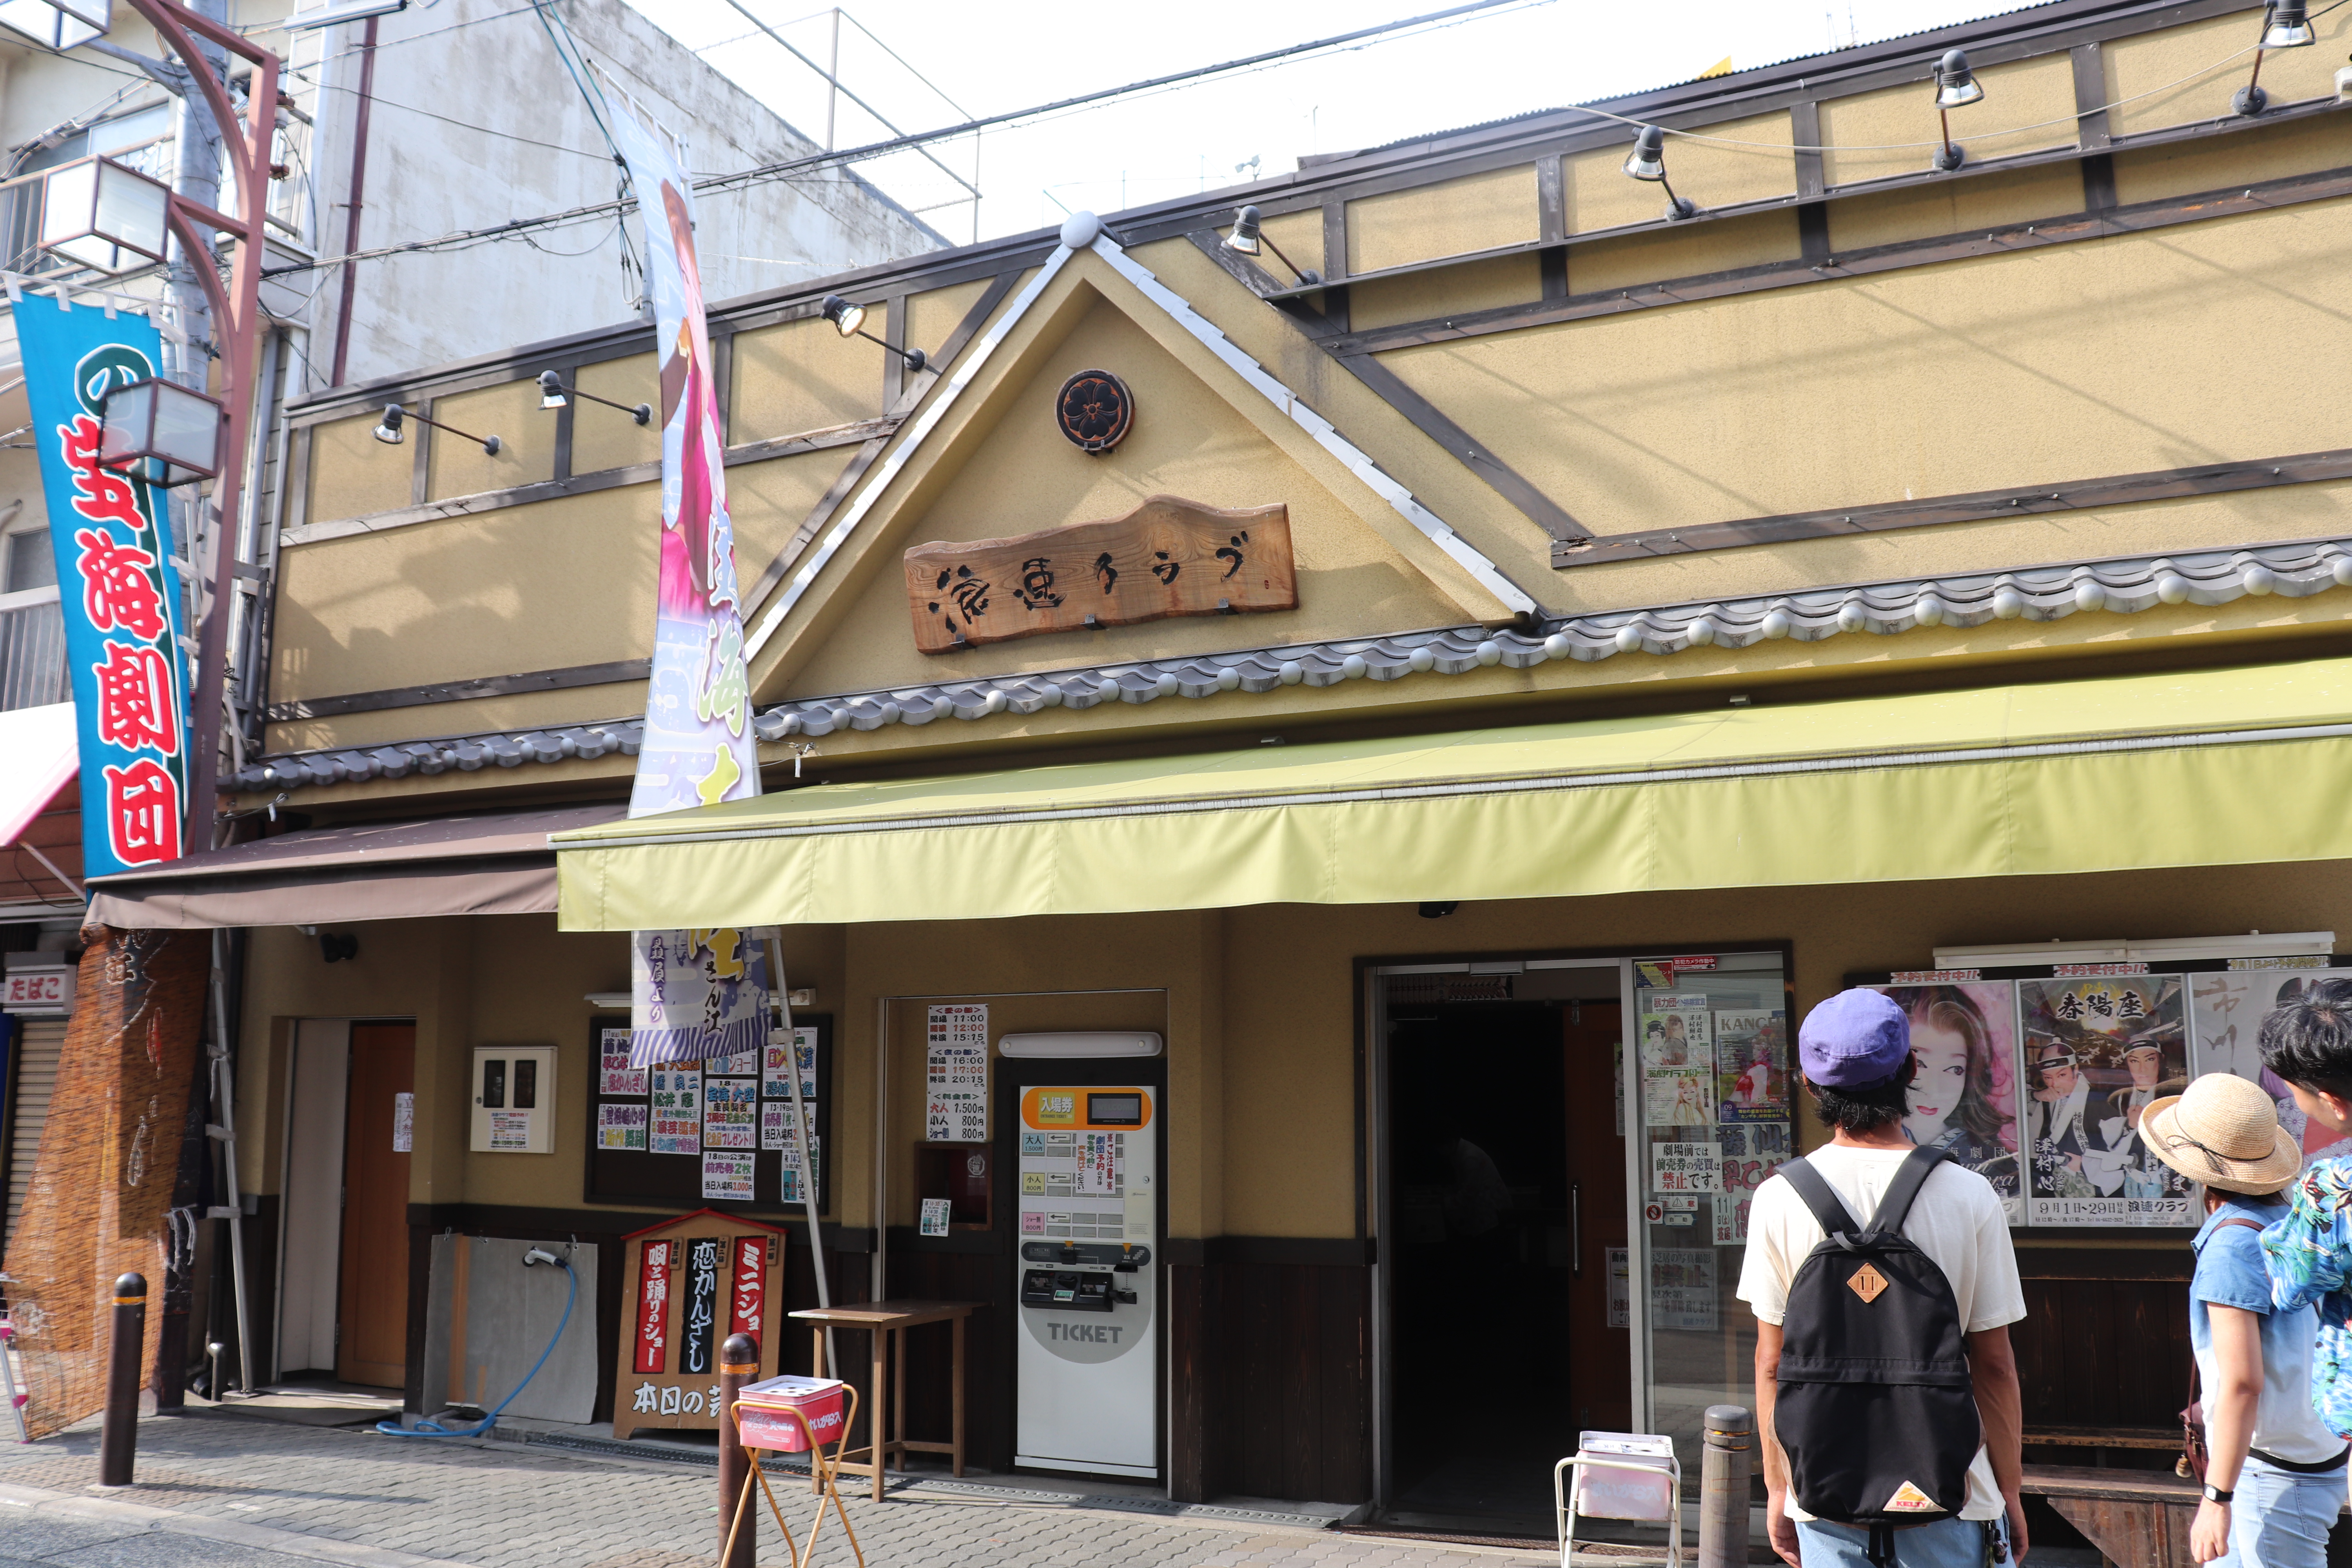 Naniwa Clun theater in shinsekai